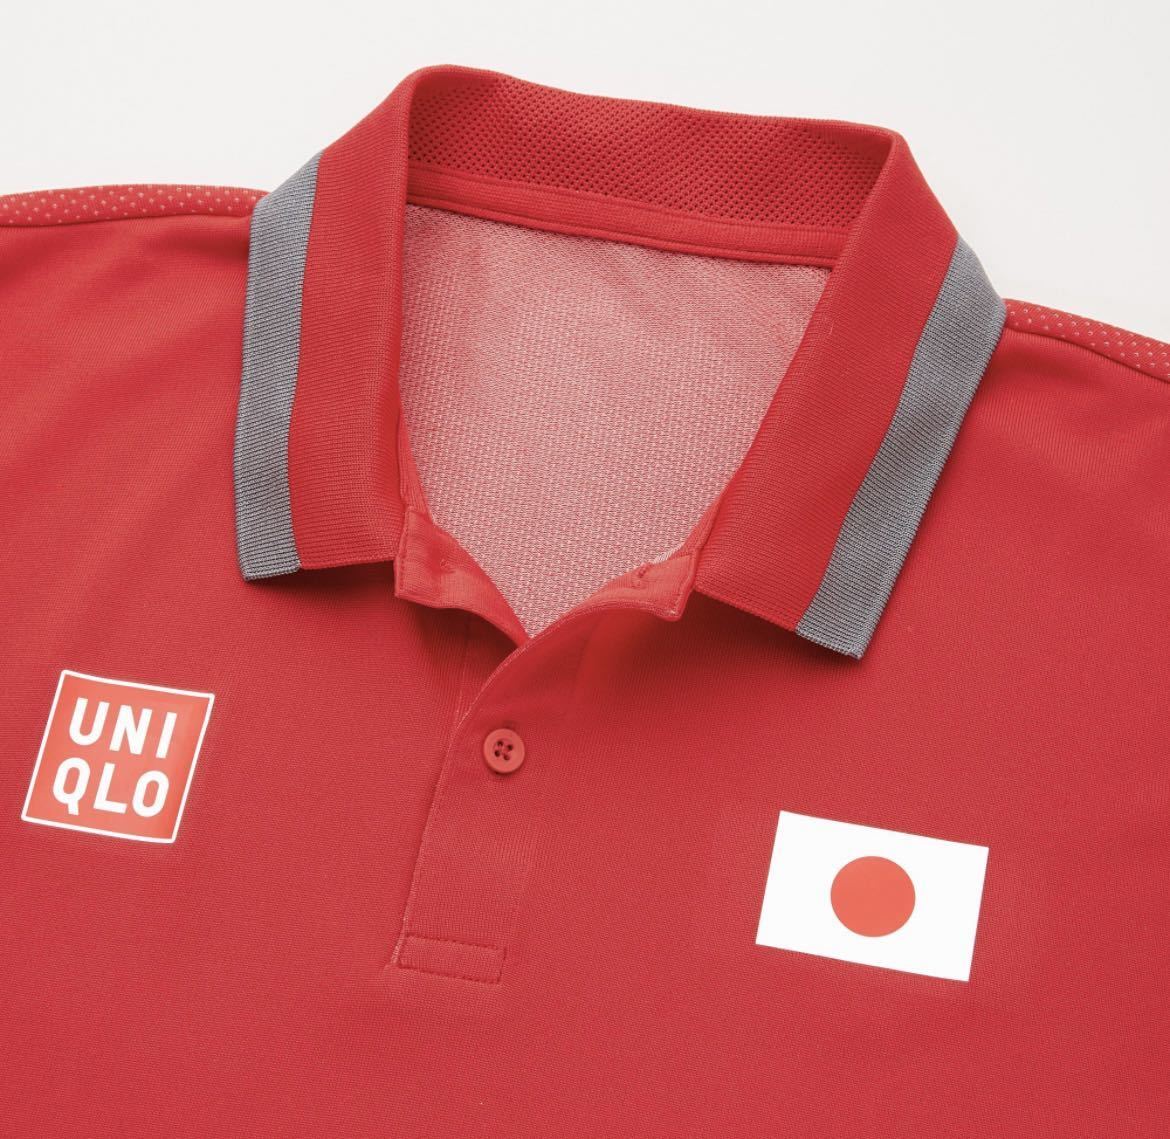 UNIQLO TOKYO 2020 Olympic GAME KN Tennis Wear ユニクロ 錦織圭モデル 東京オリンピックモデル ゲームウェア Mサイズ 新品・タグ付き_画像3